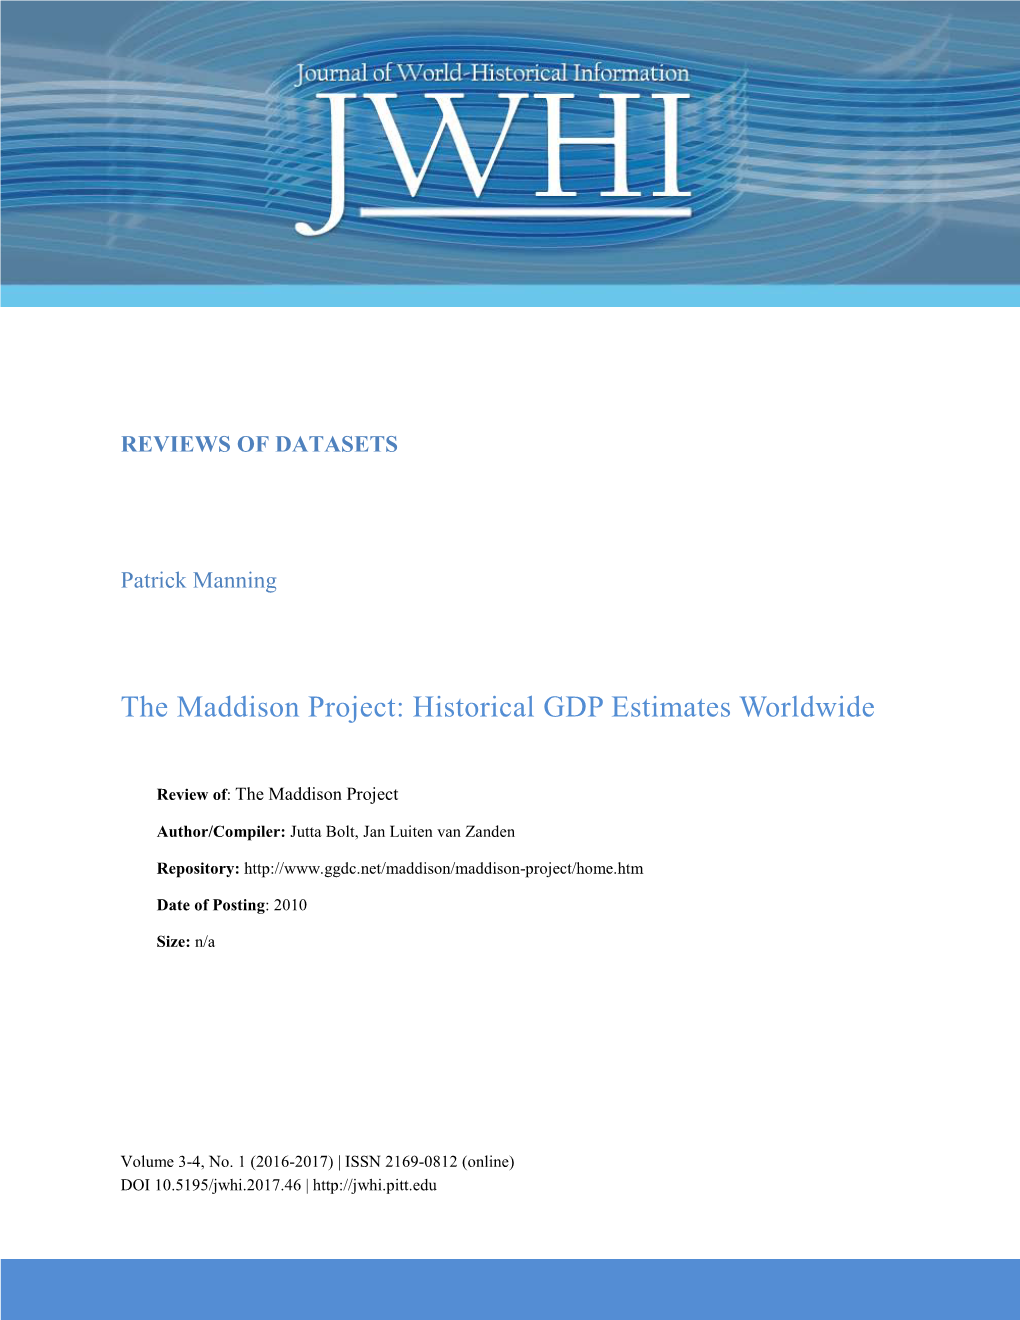 The Maddison Project: Historical GDP Estimates Worldwide